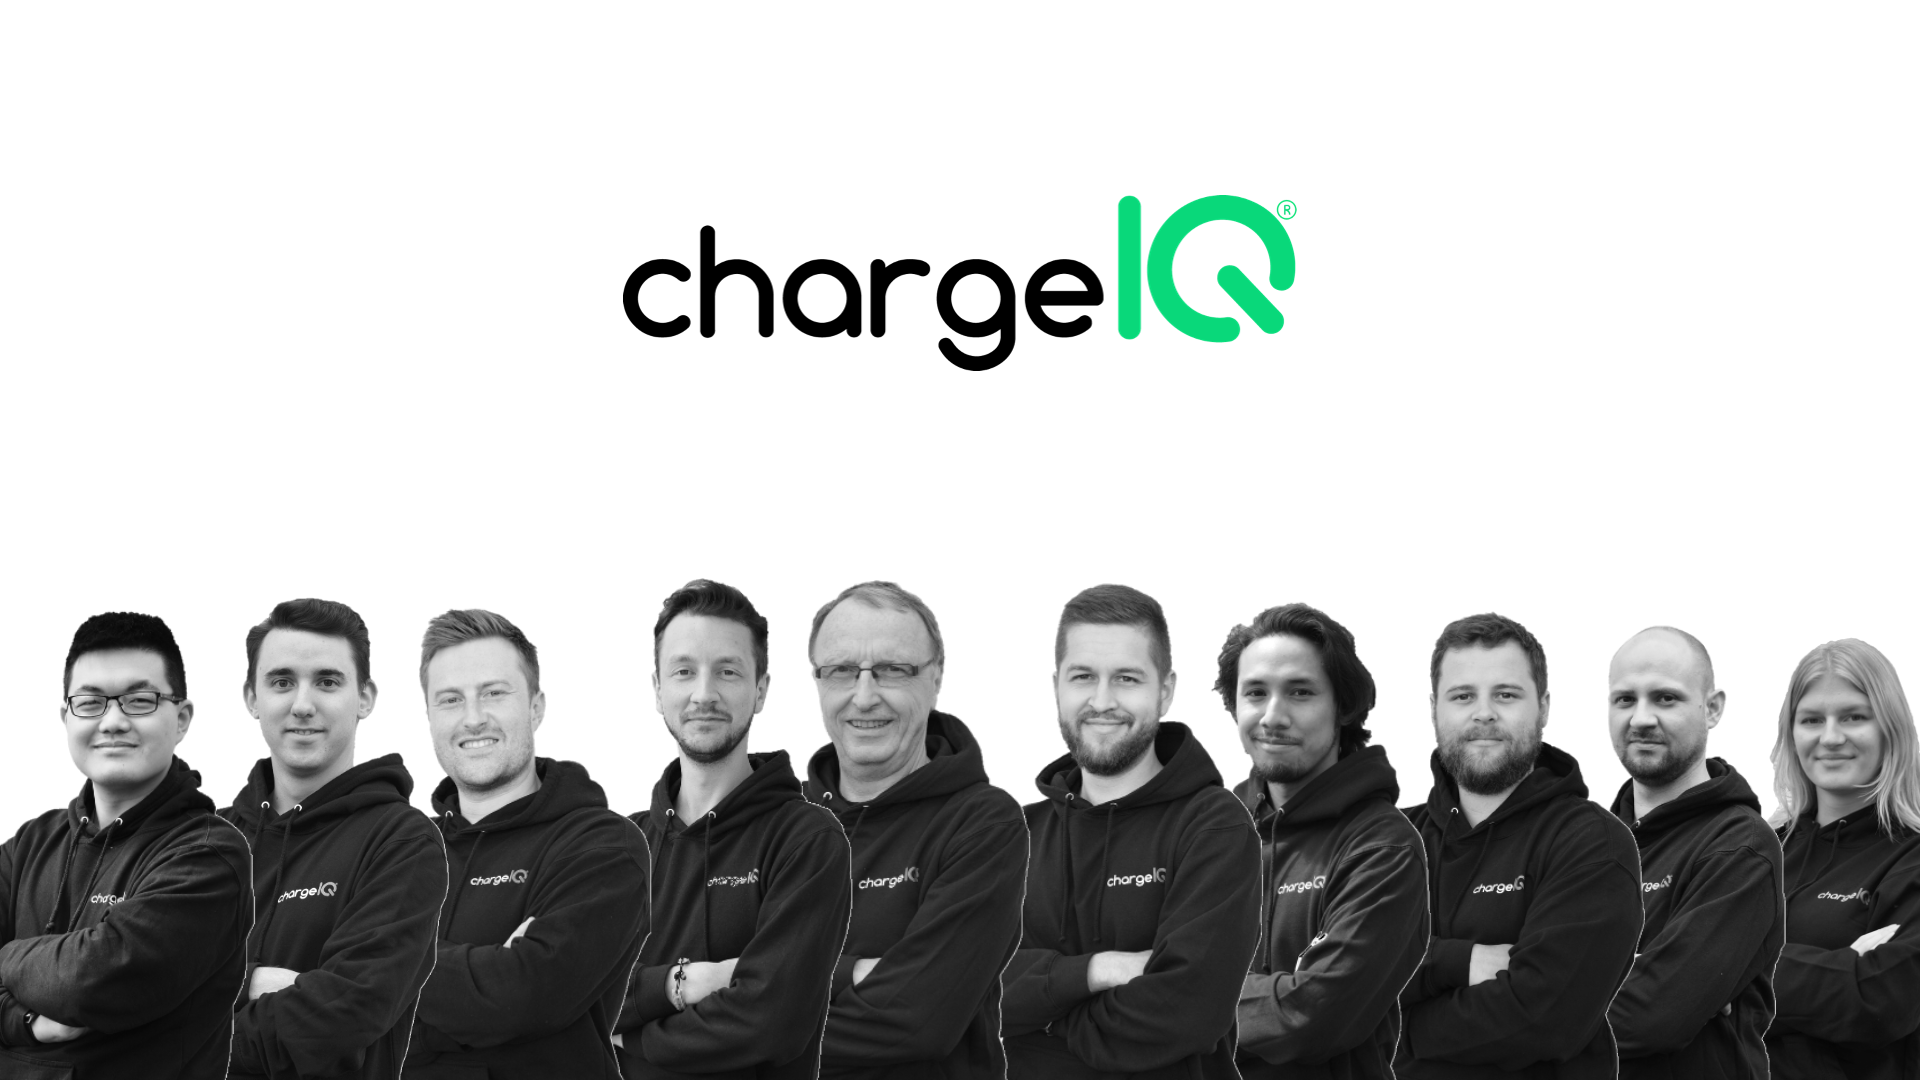 Teamfoto chargeIQ GmbH (c) Johannes Wieland, chargeIQ GmbH